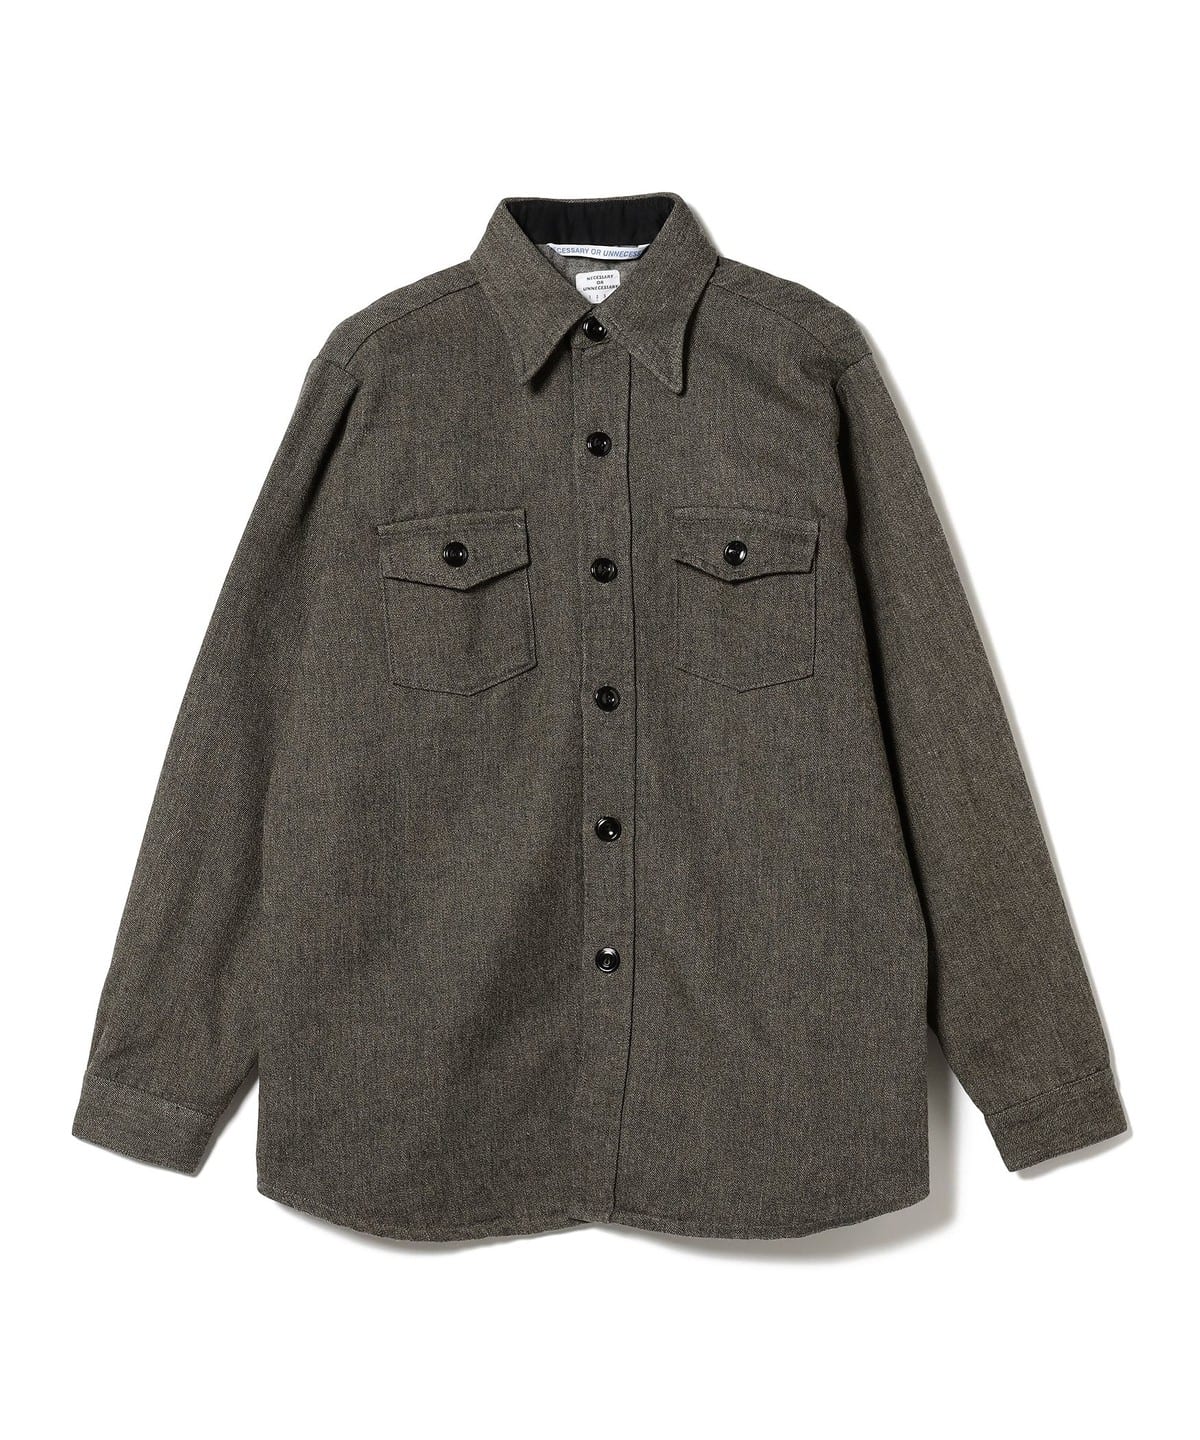 fennica NECESSARY or UNNECESSARY / NOUN flannel shirt (shirt